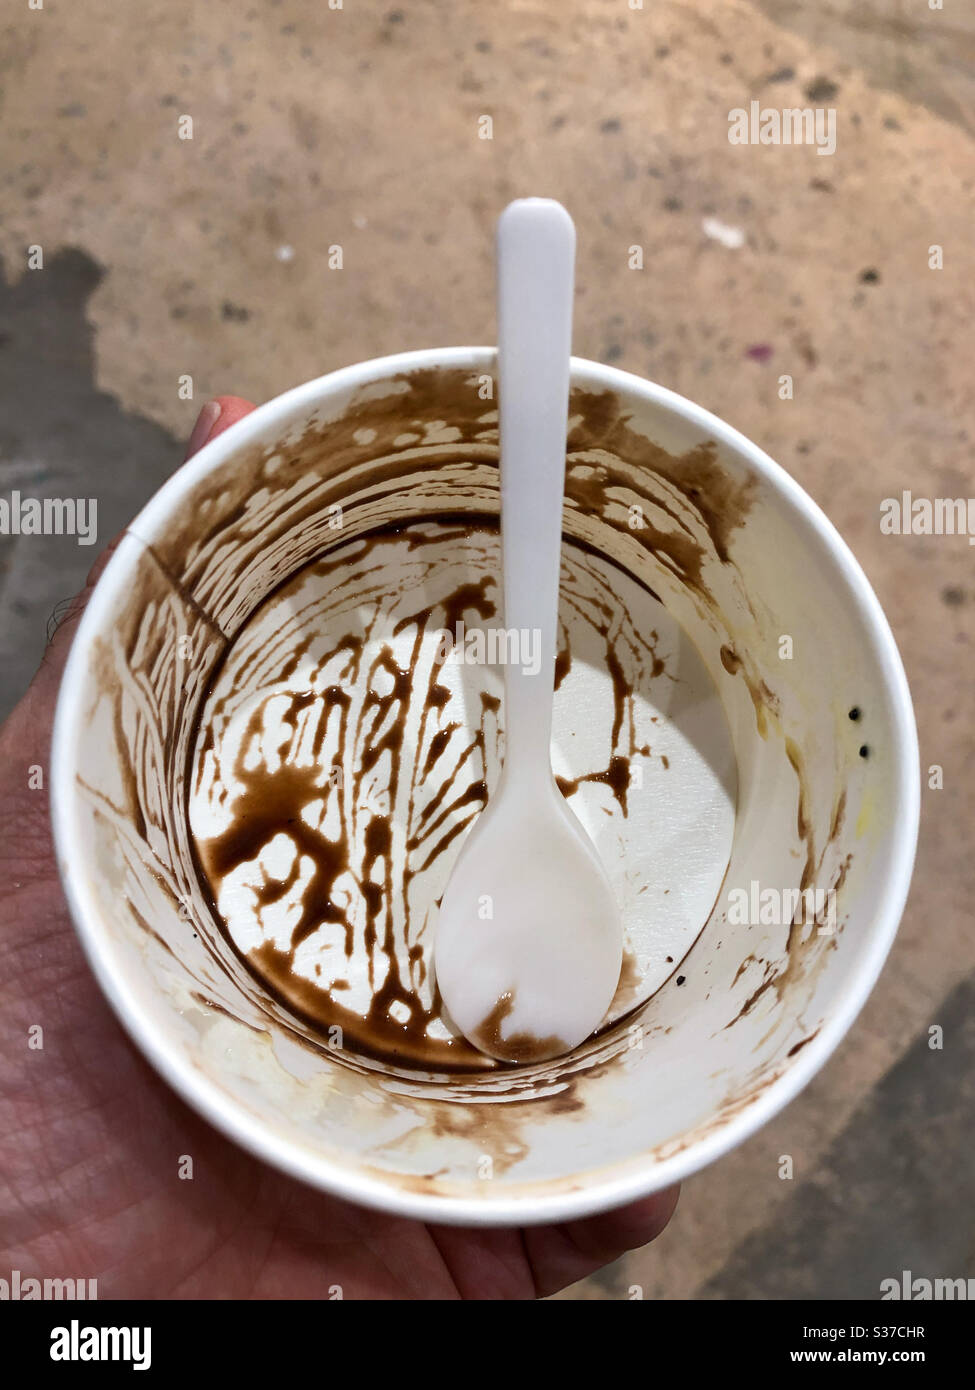 https://c8.alamy.com/comp/S37CHR/empty-tub-of-chocolate-ice-cream-with-a-plastic-spoon-S37CHR.jpg